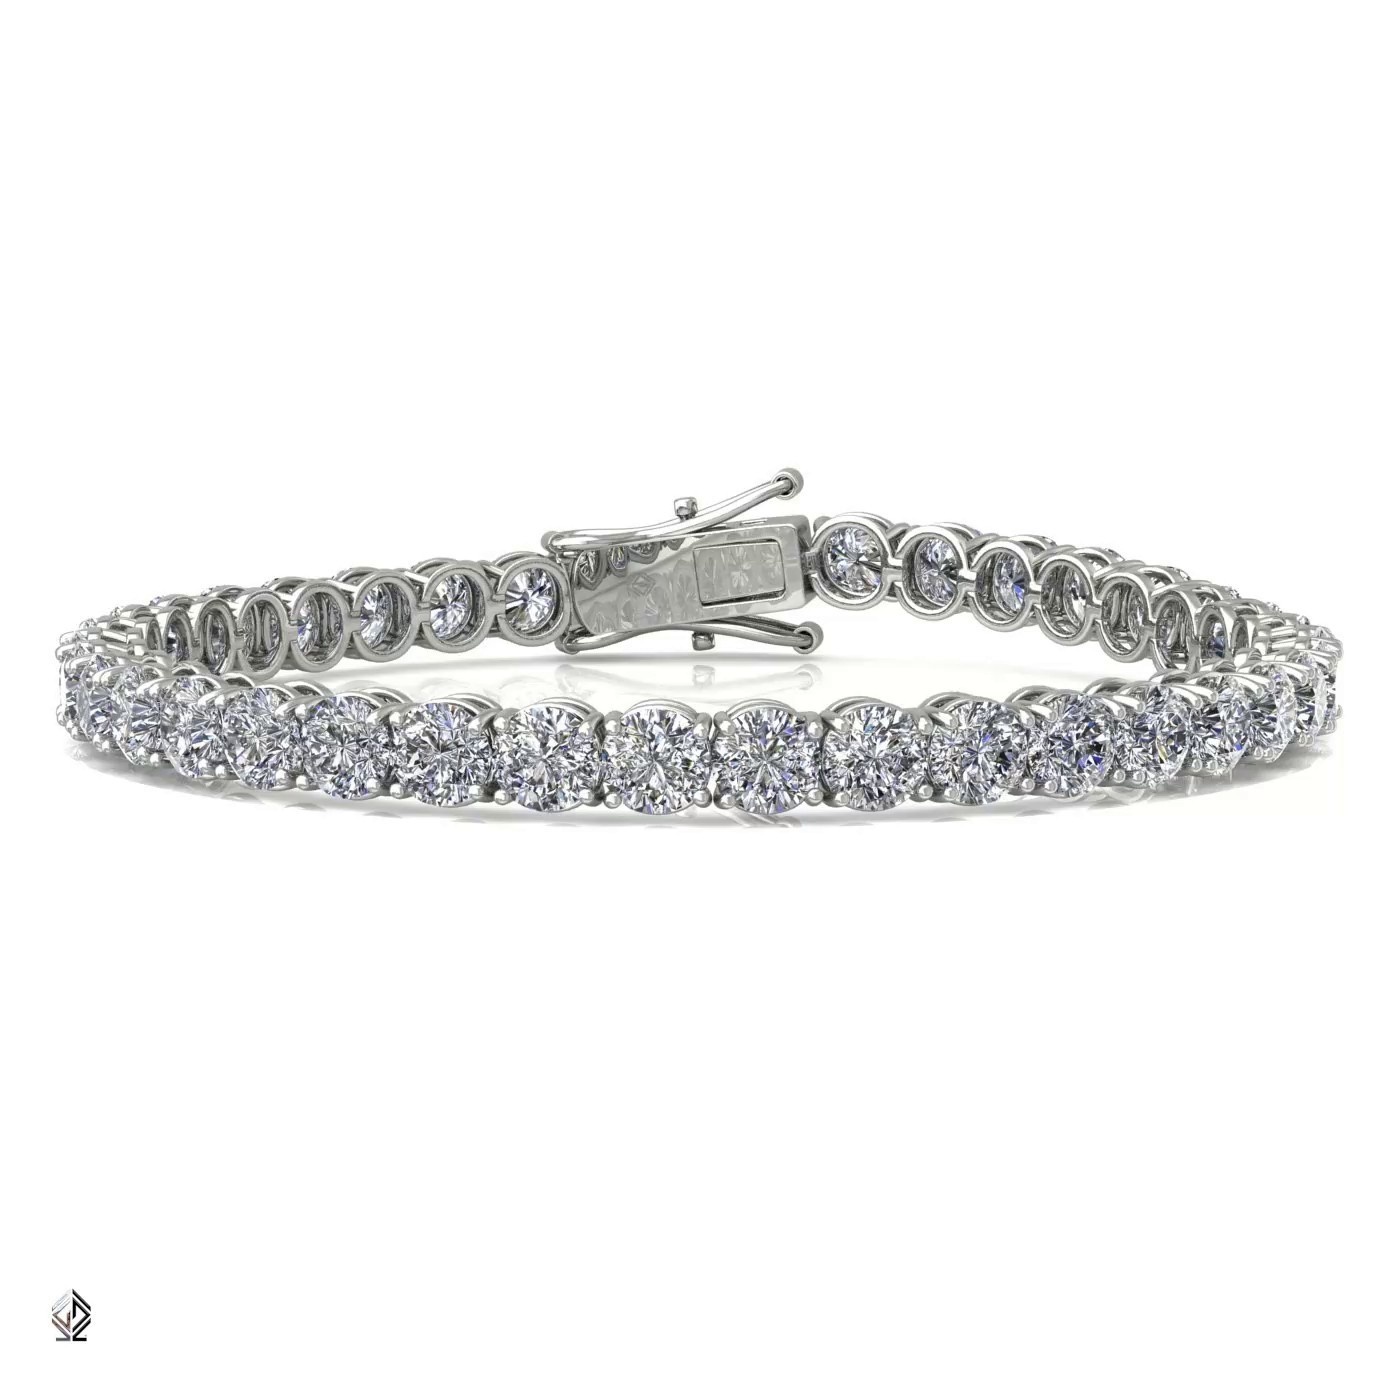 18k white gold 4.2mm 4 prong round shape diamond tennis bracelet in round setting Photos & images